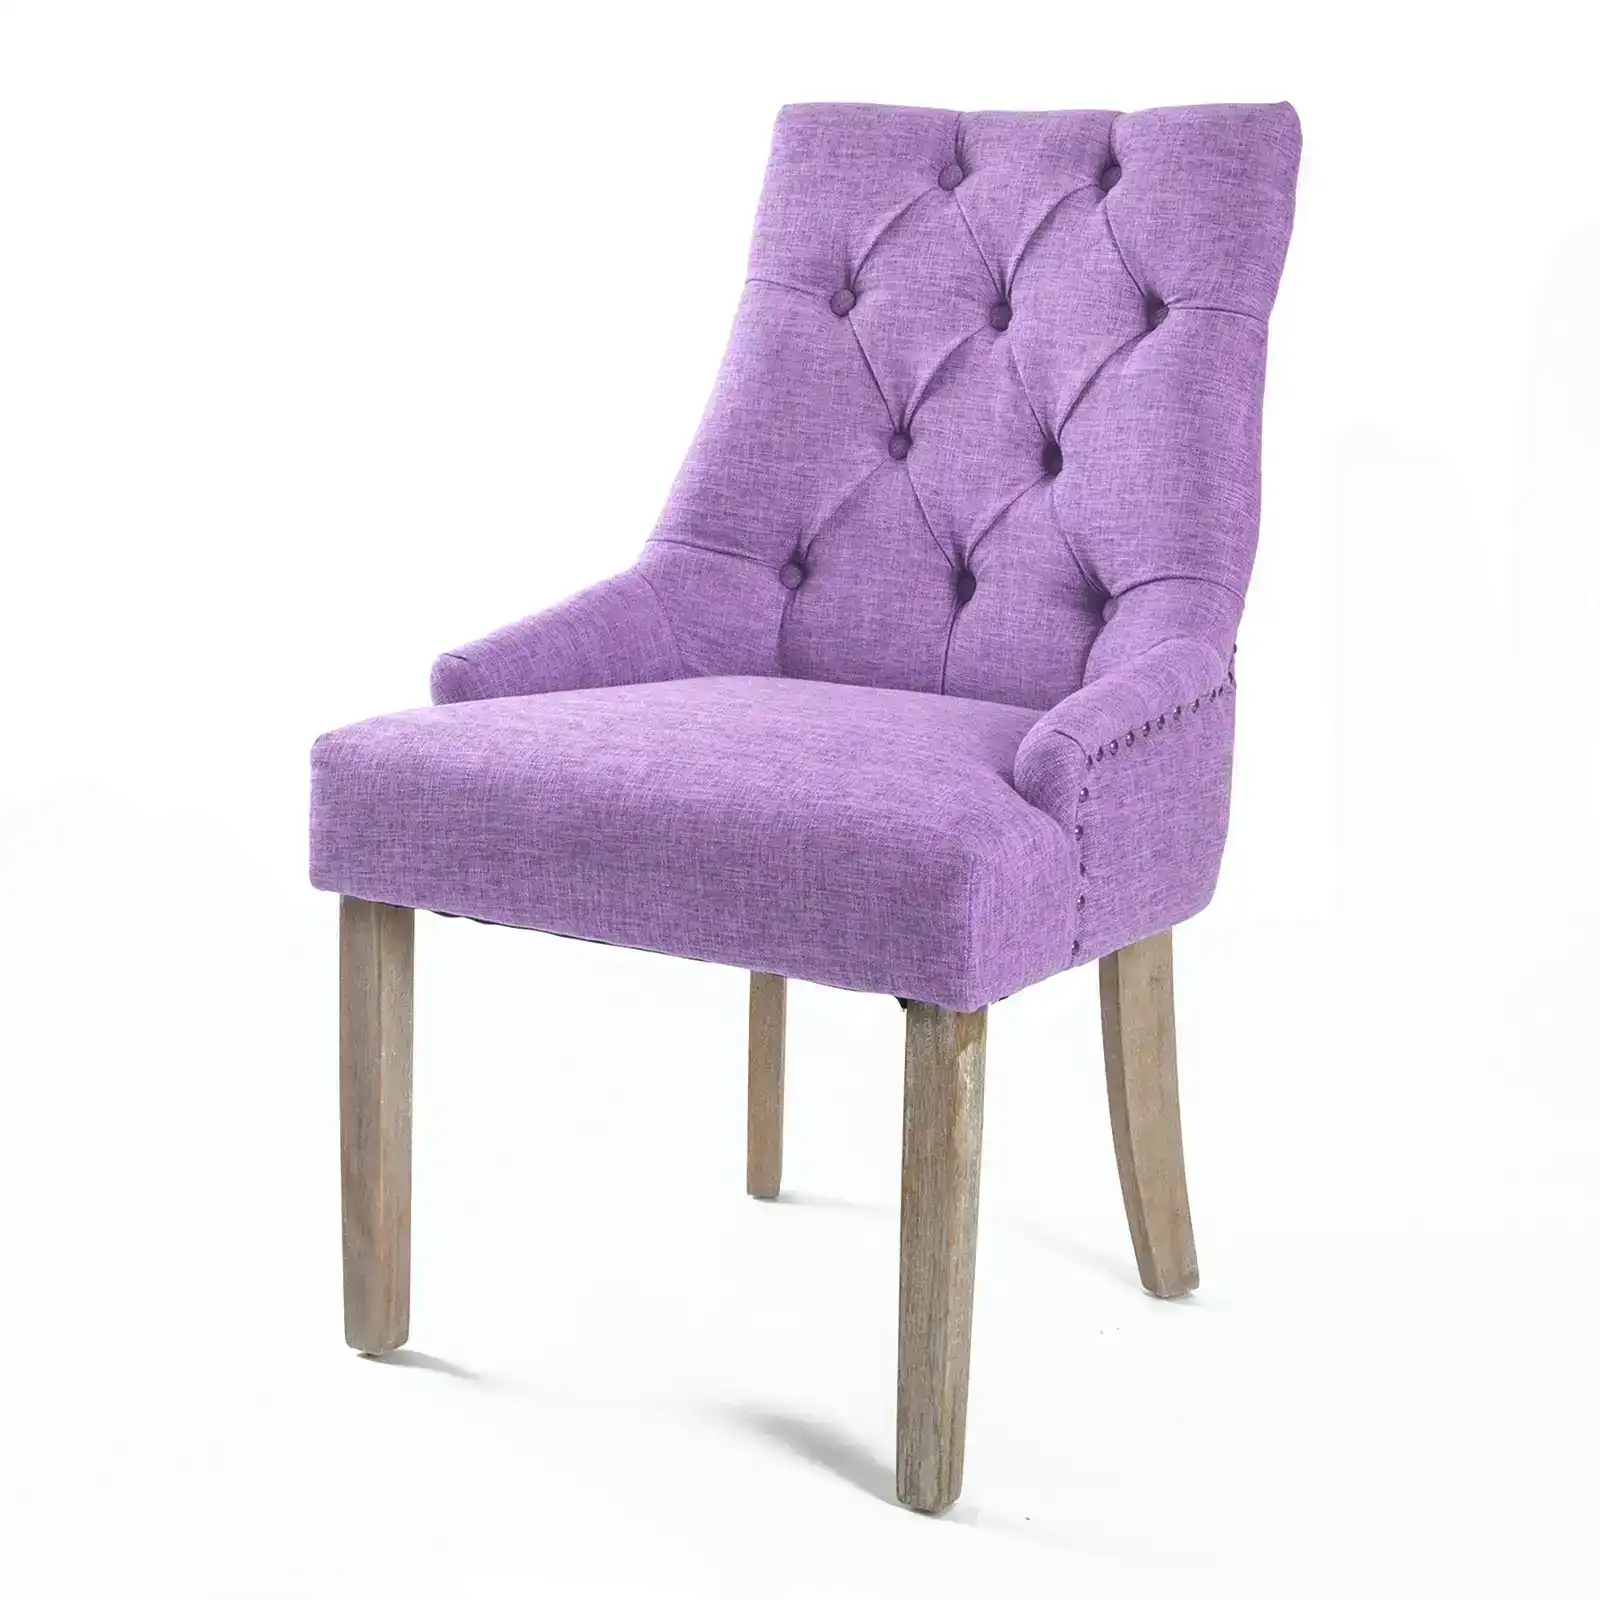 1X French Provincial Oak Leg Chair AMOUR - VIOLET